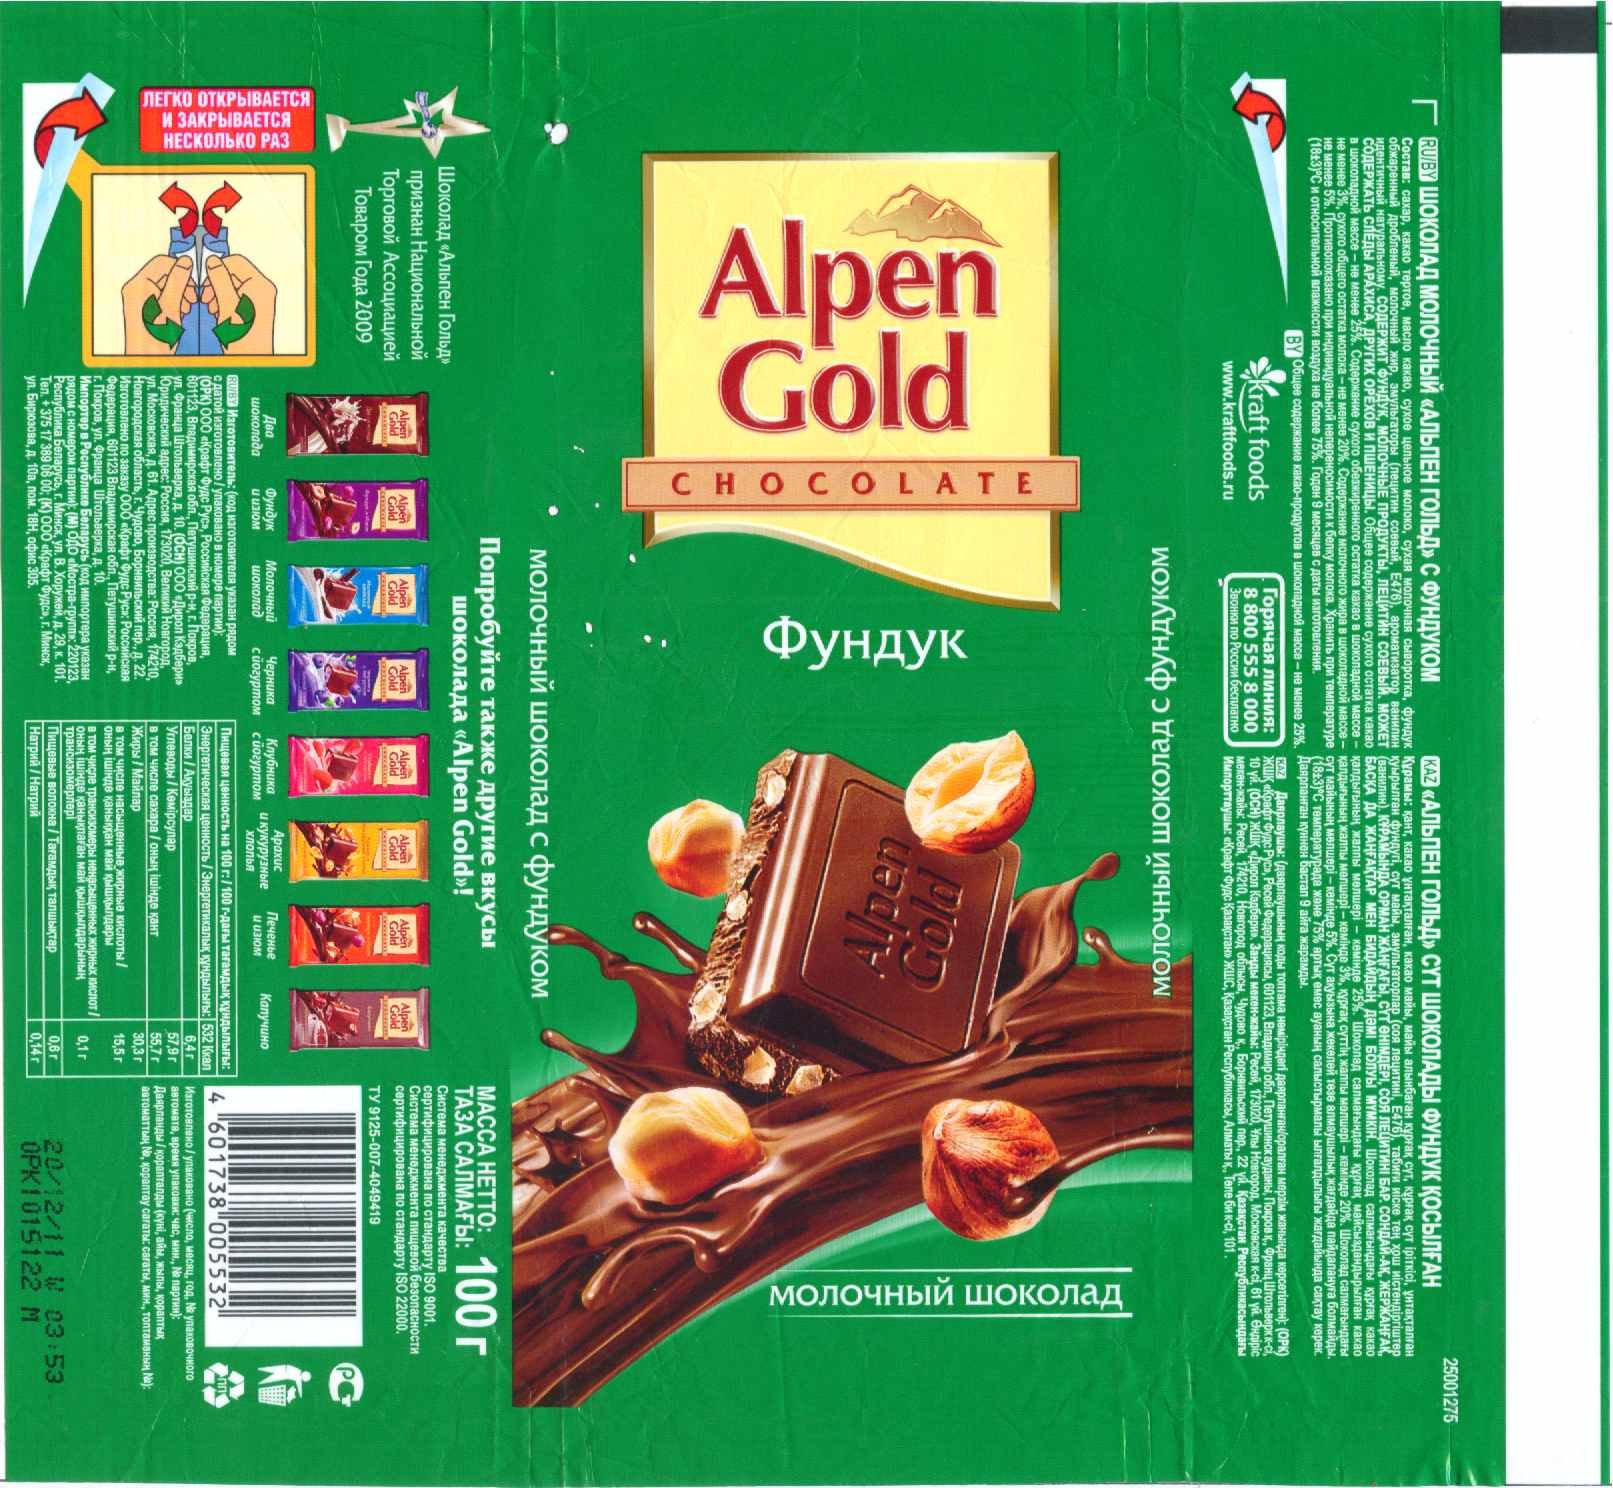 Обертка шоколада размеры. Шоколад Альпен Гольд молочный этикетка 85гр. Альпен Гольд шоколад молочный 85 гр. Альпен Гольд шоколад ассортимент. Шоколад Alpen Gold 85гр. Молочный.